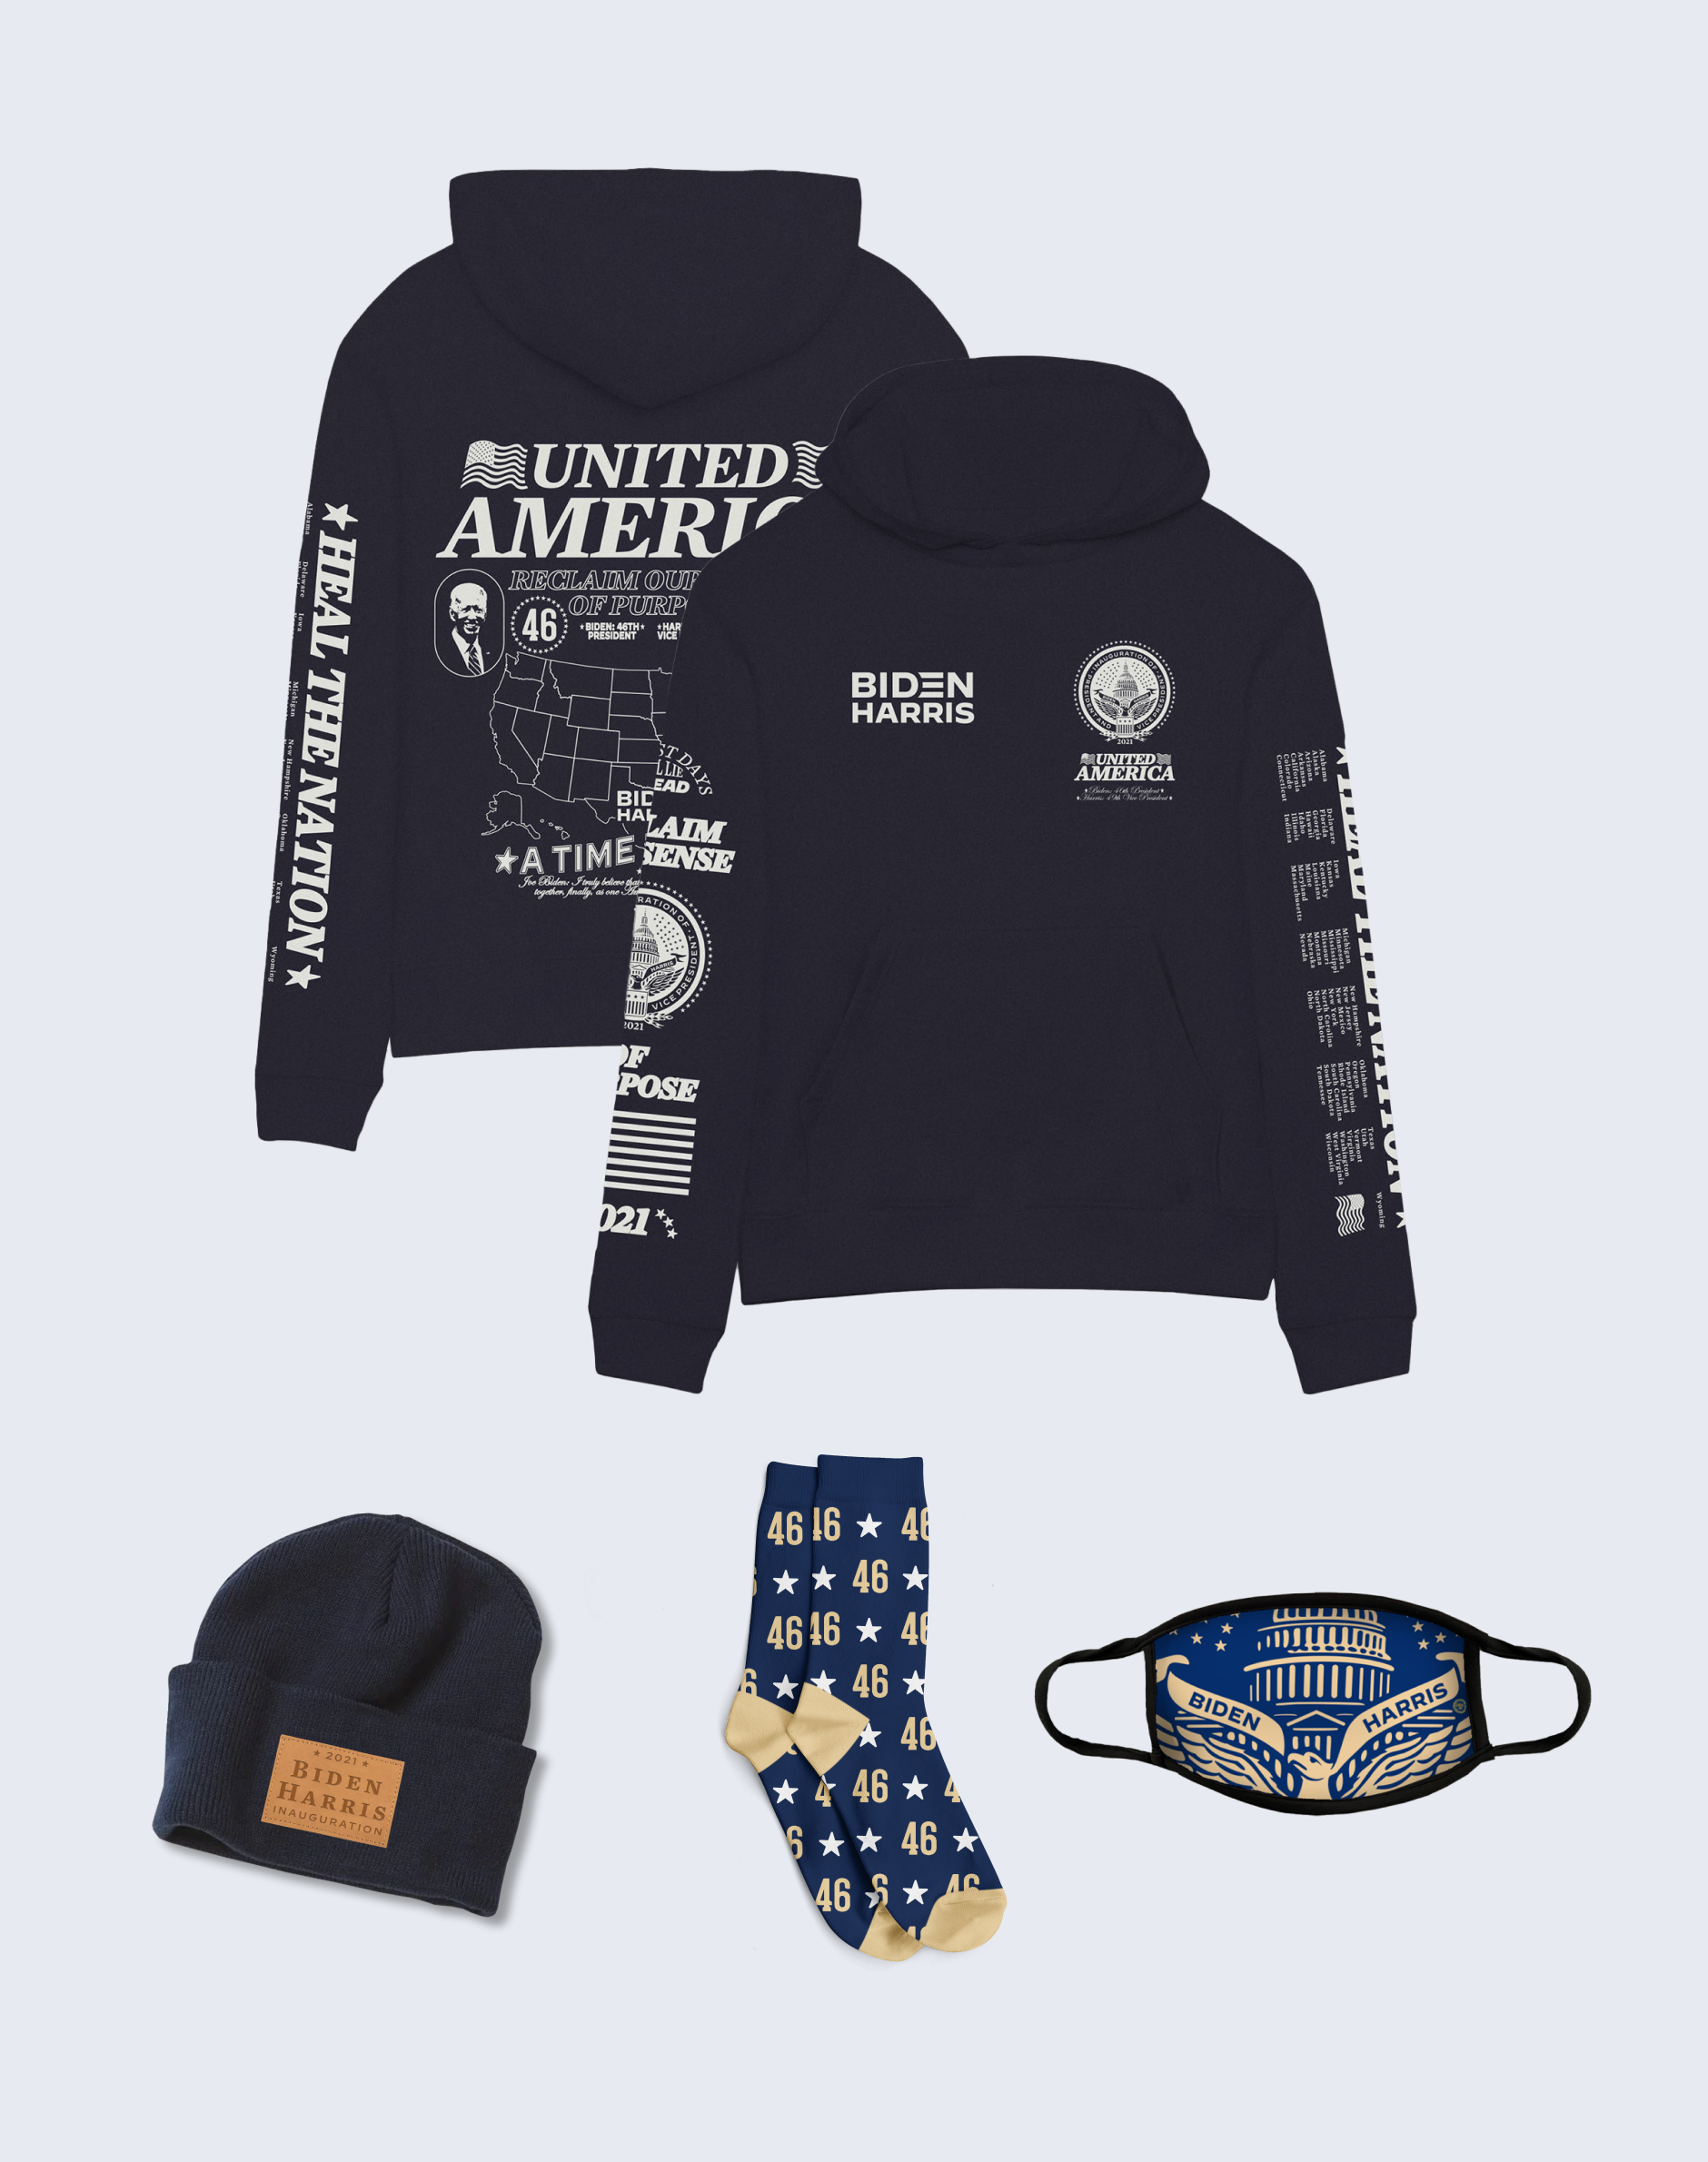 Sweatshirt, hat, socks, and mask with Inauguration designs